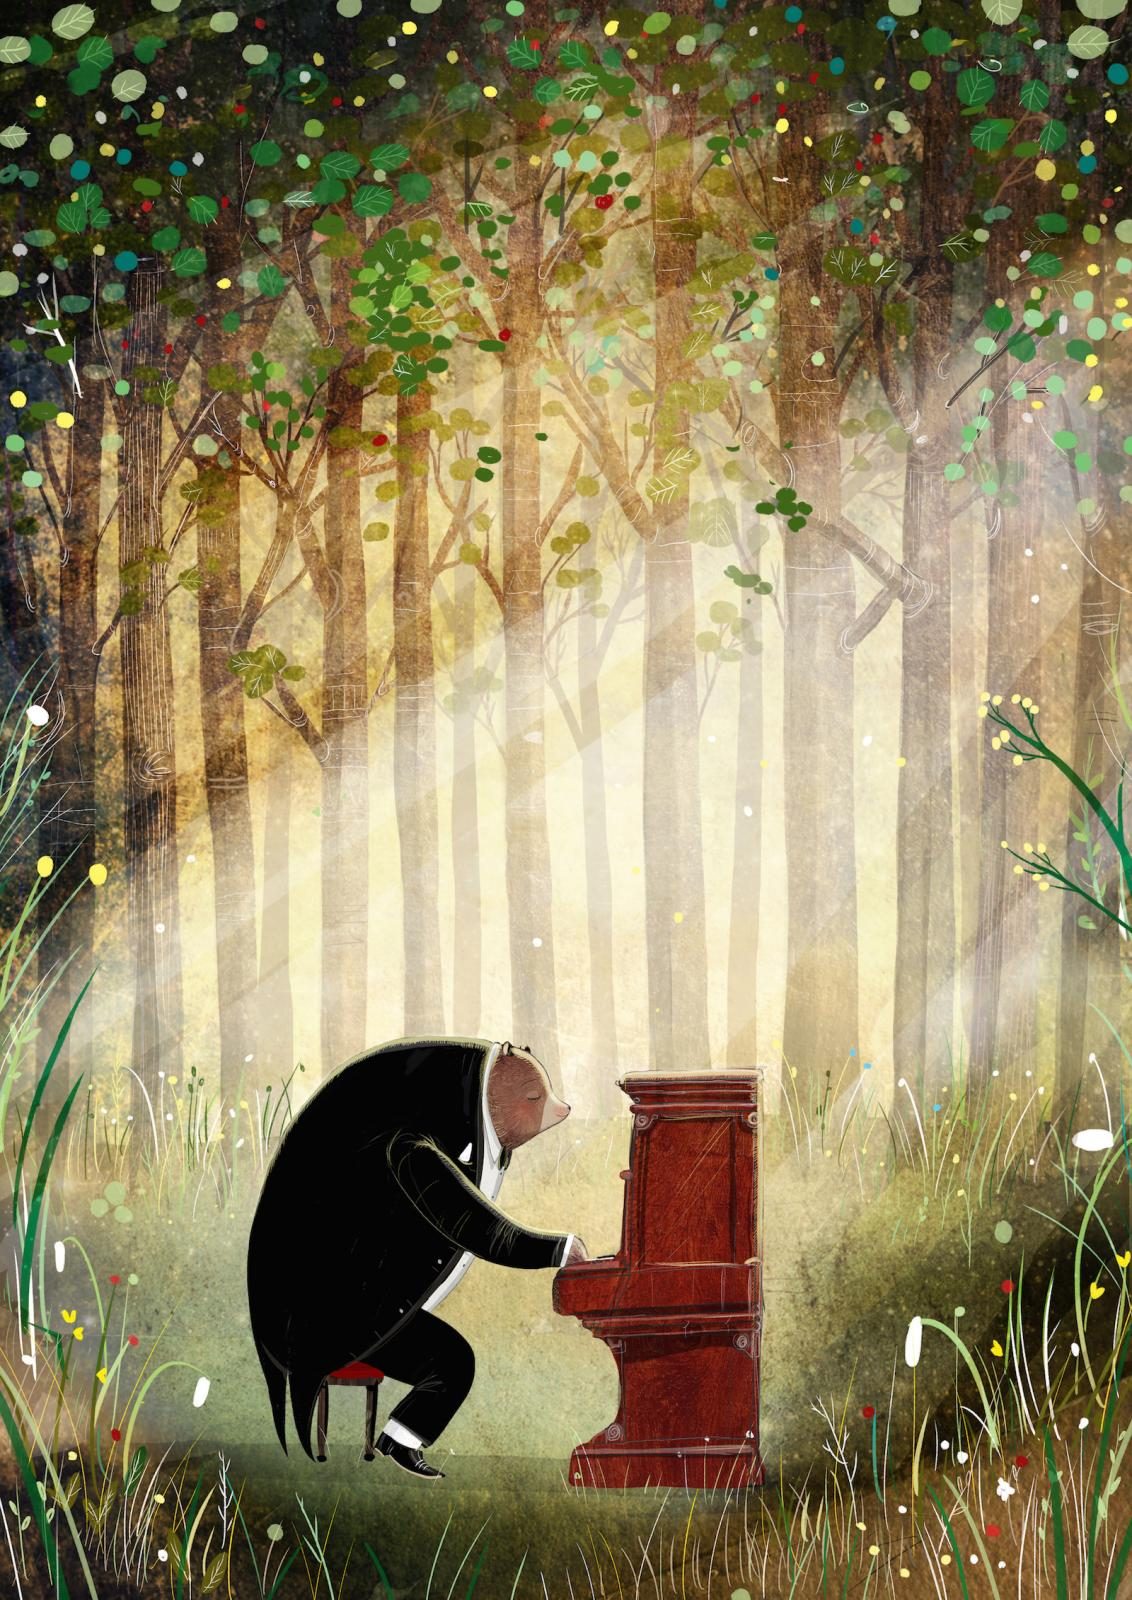 The Bear and The Piano : - World illustration Awards